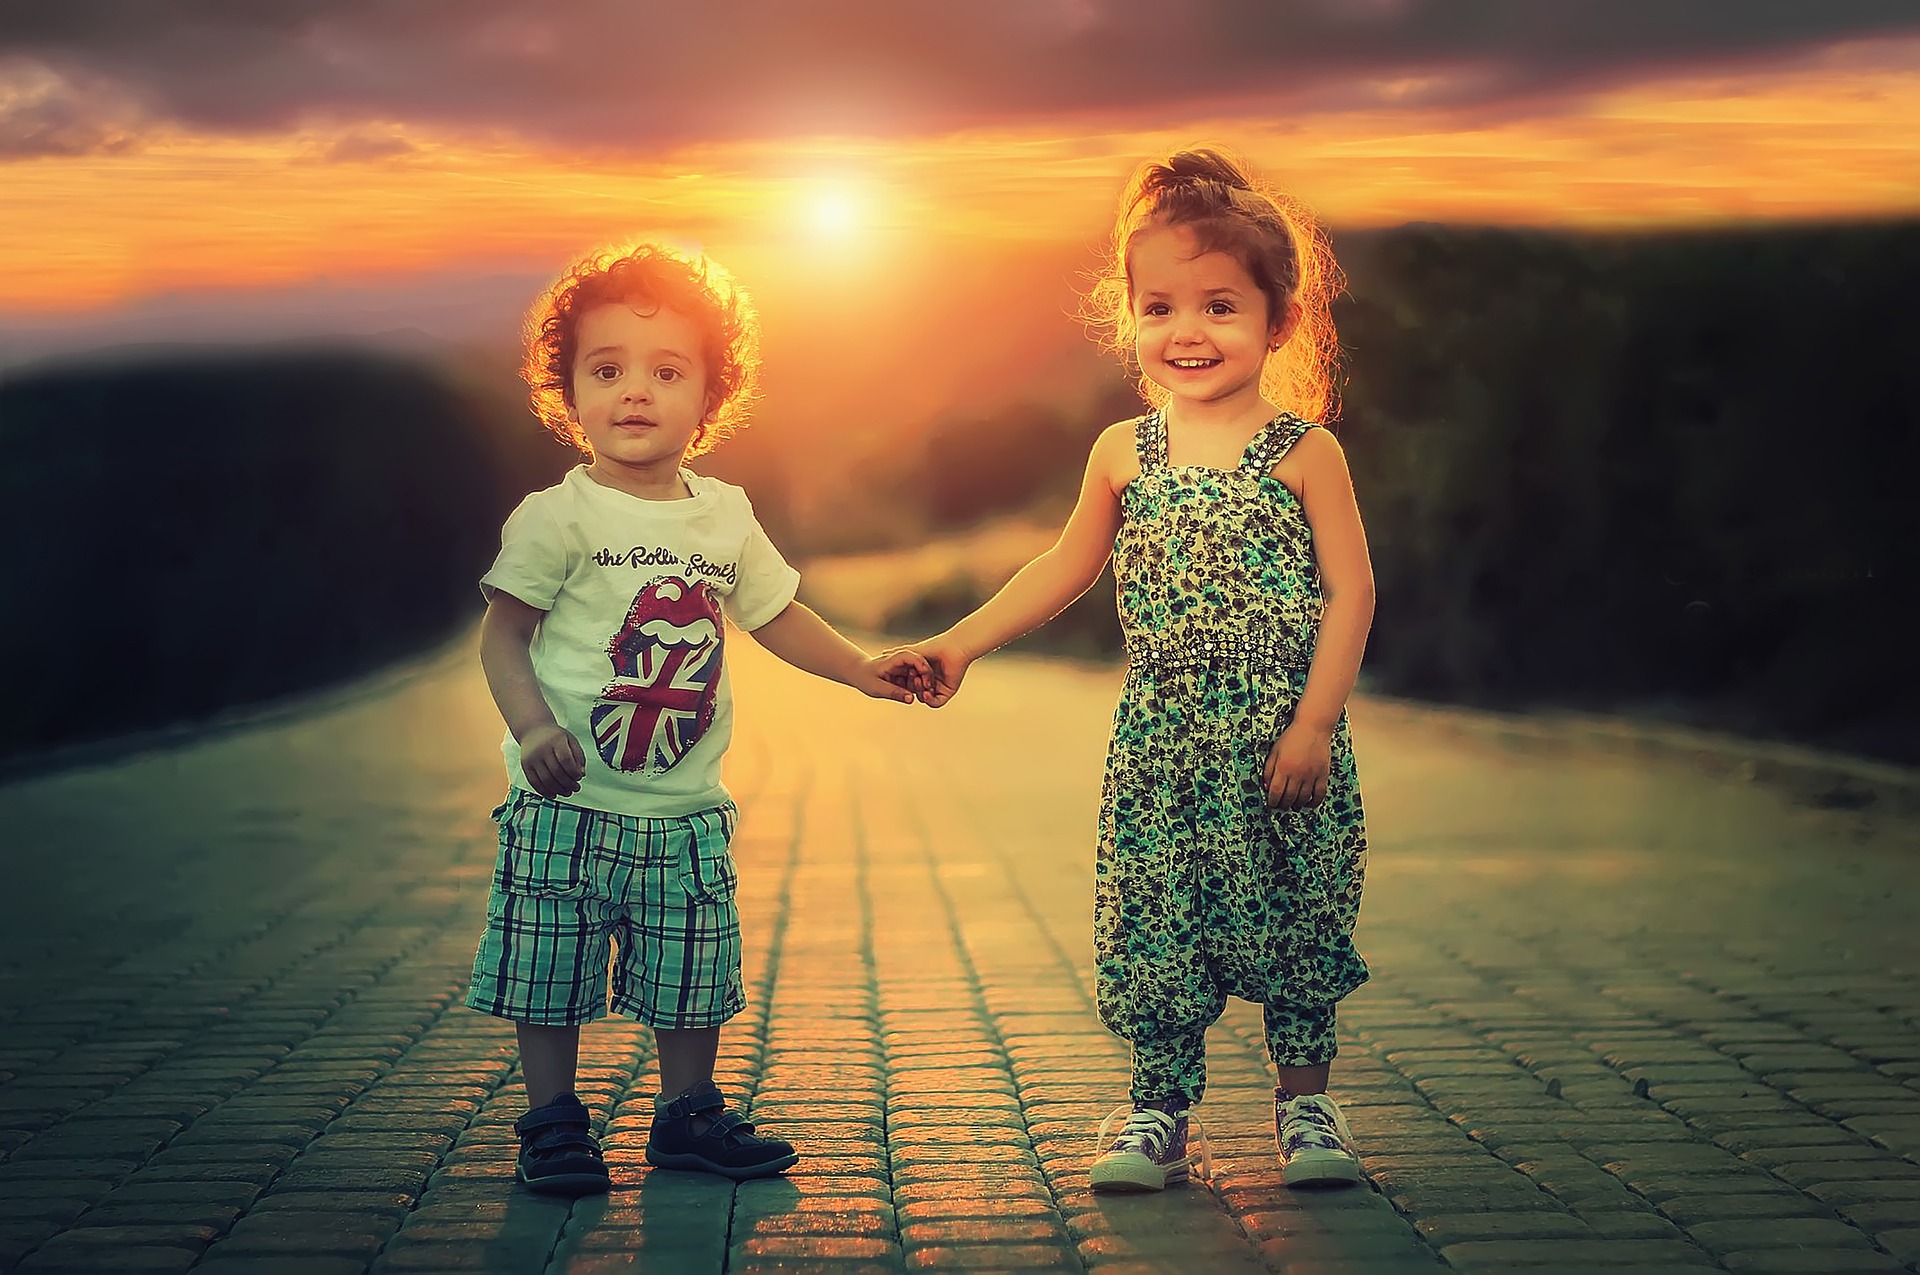 Children/siblings holding hands, love